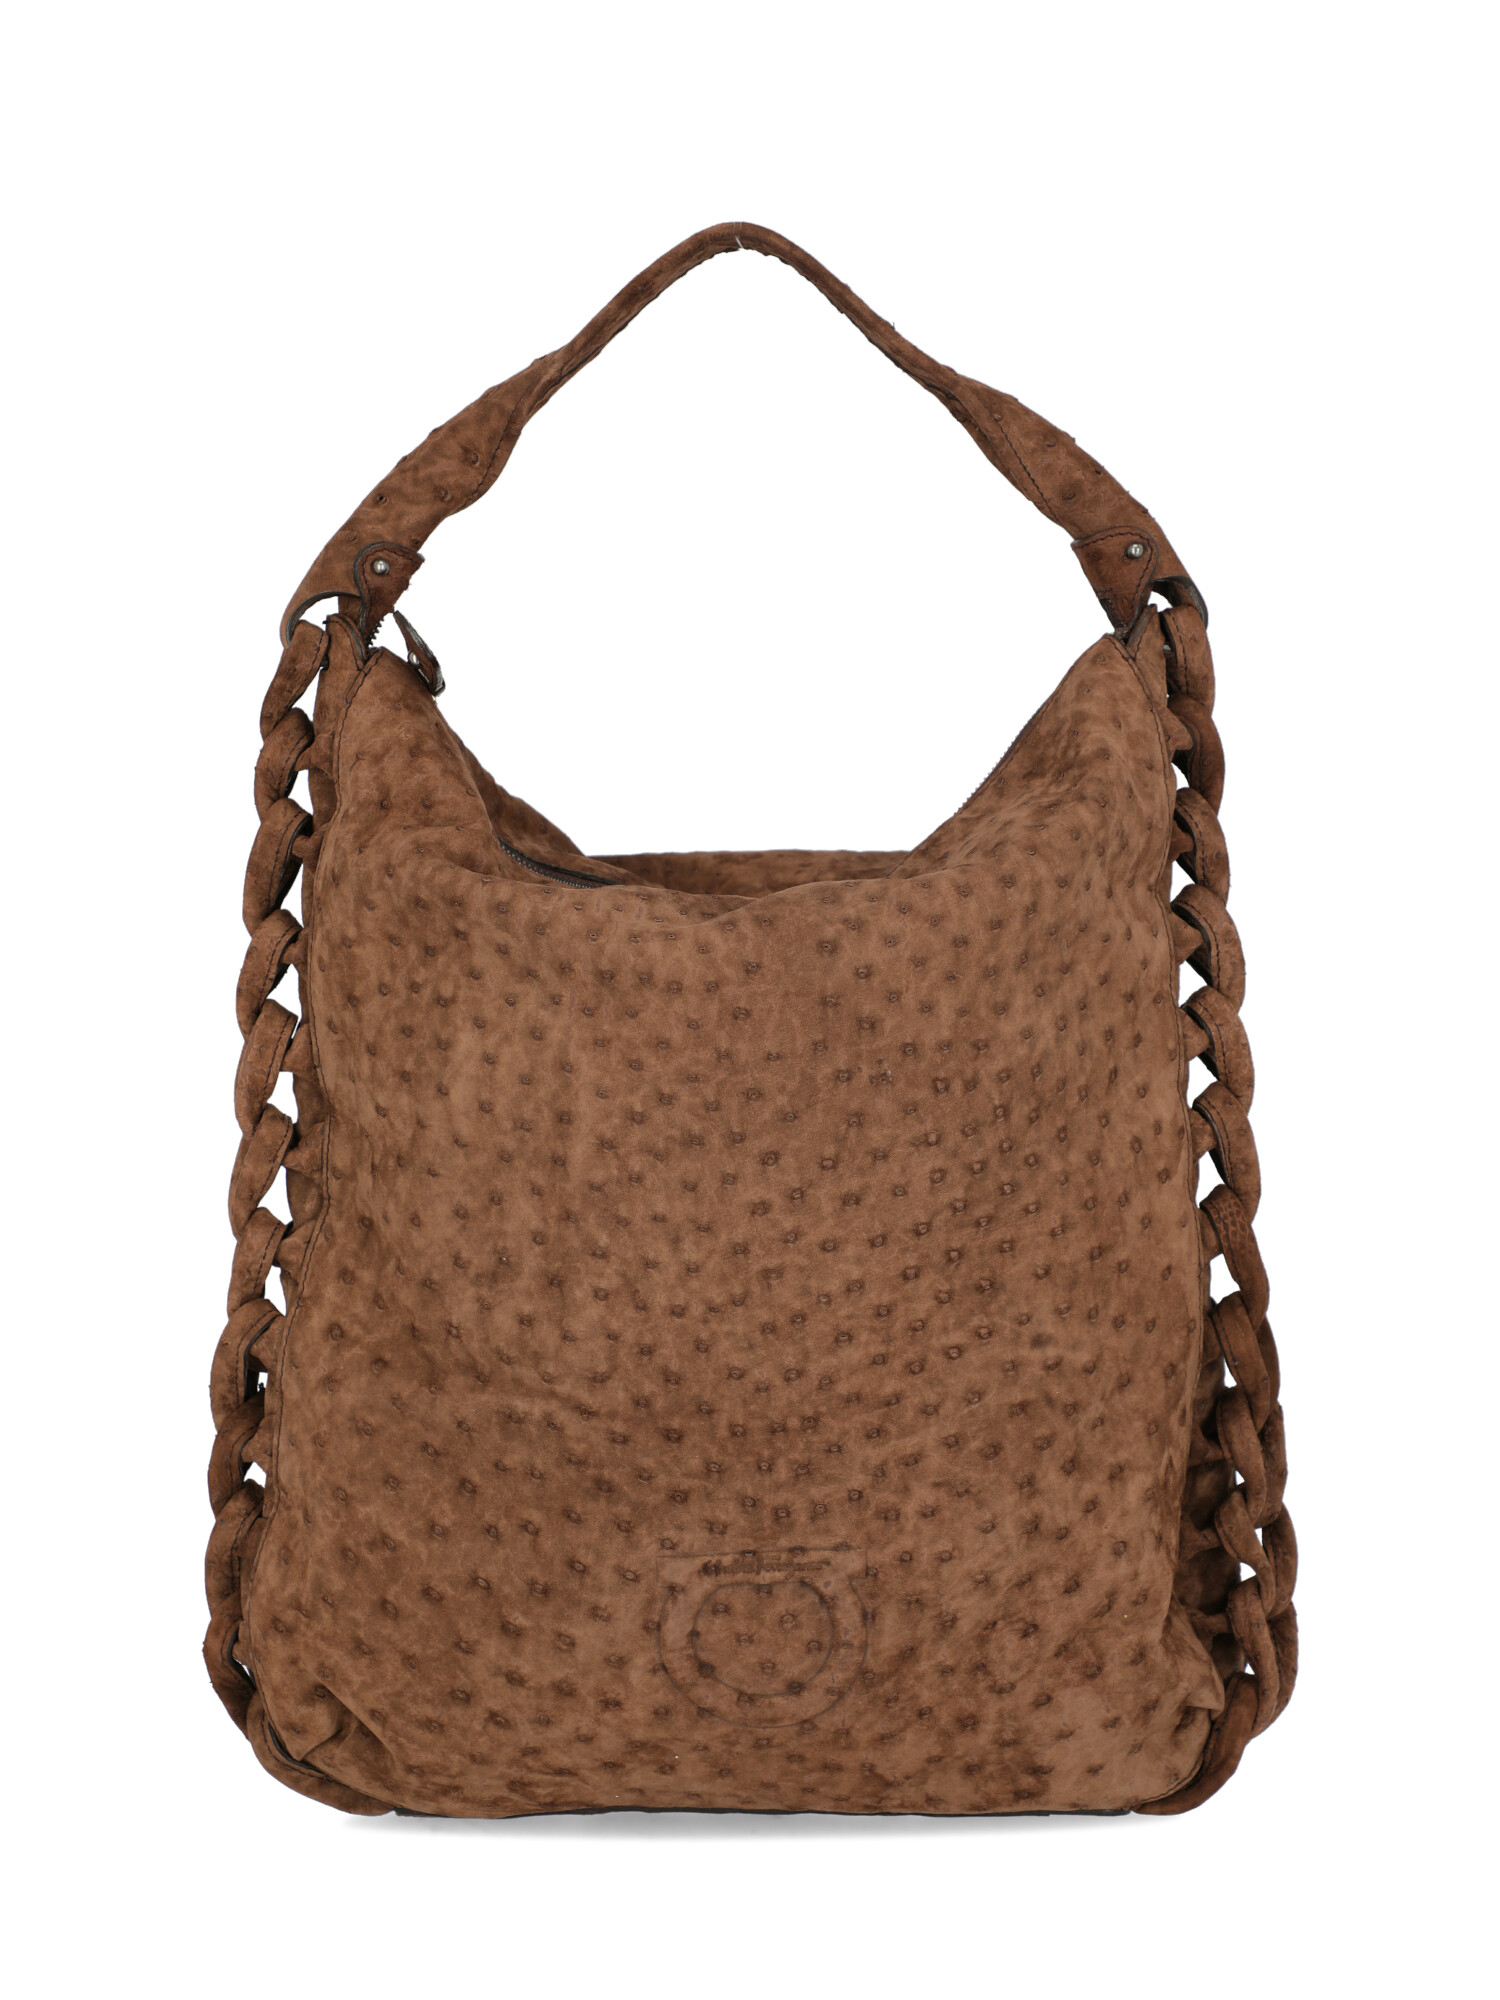 Salvatore Ferragamo Special Price Women Handbags Brown | eBay